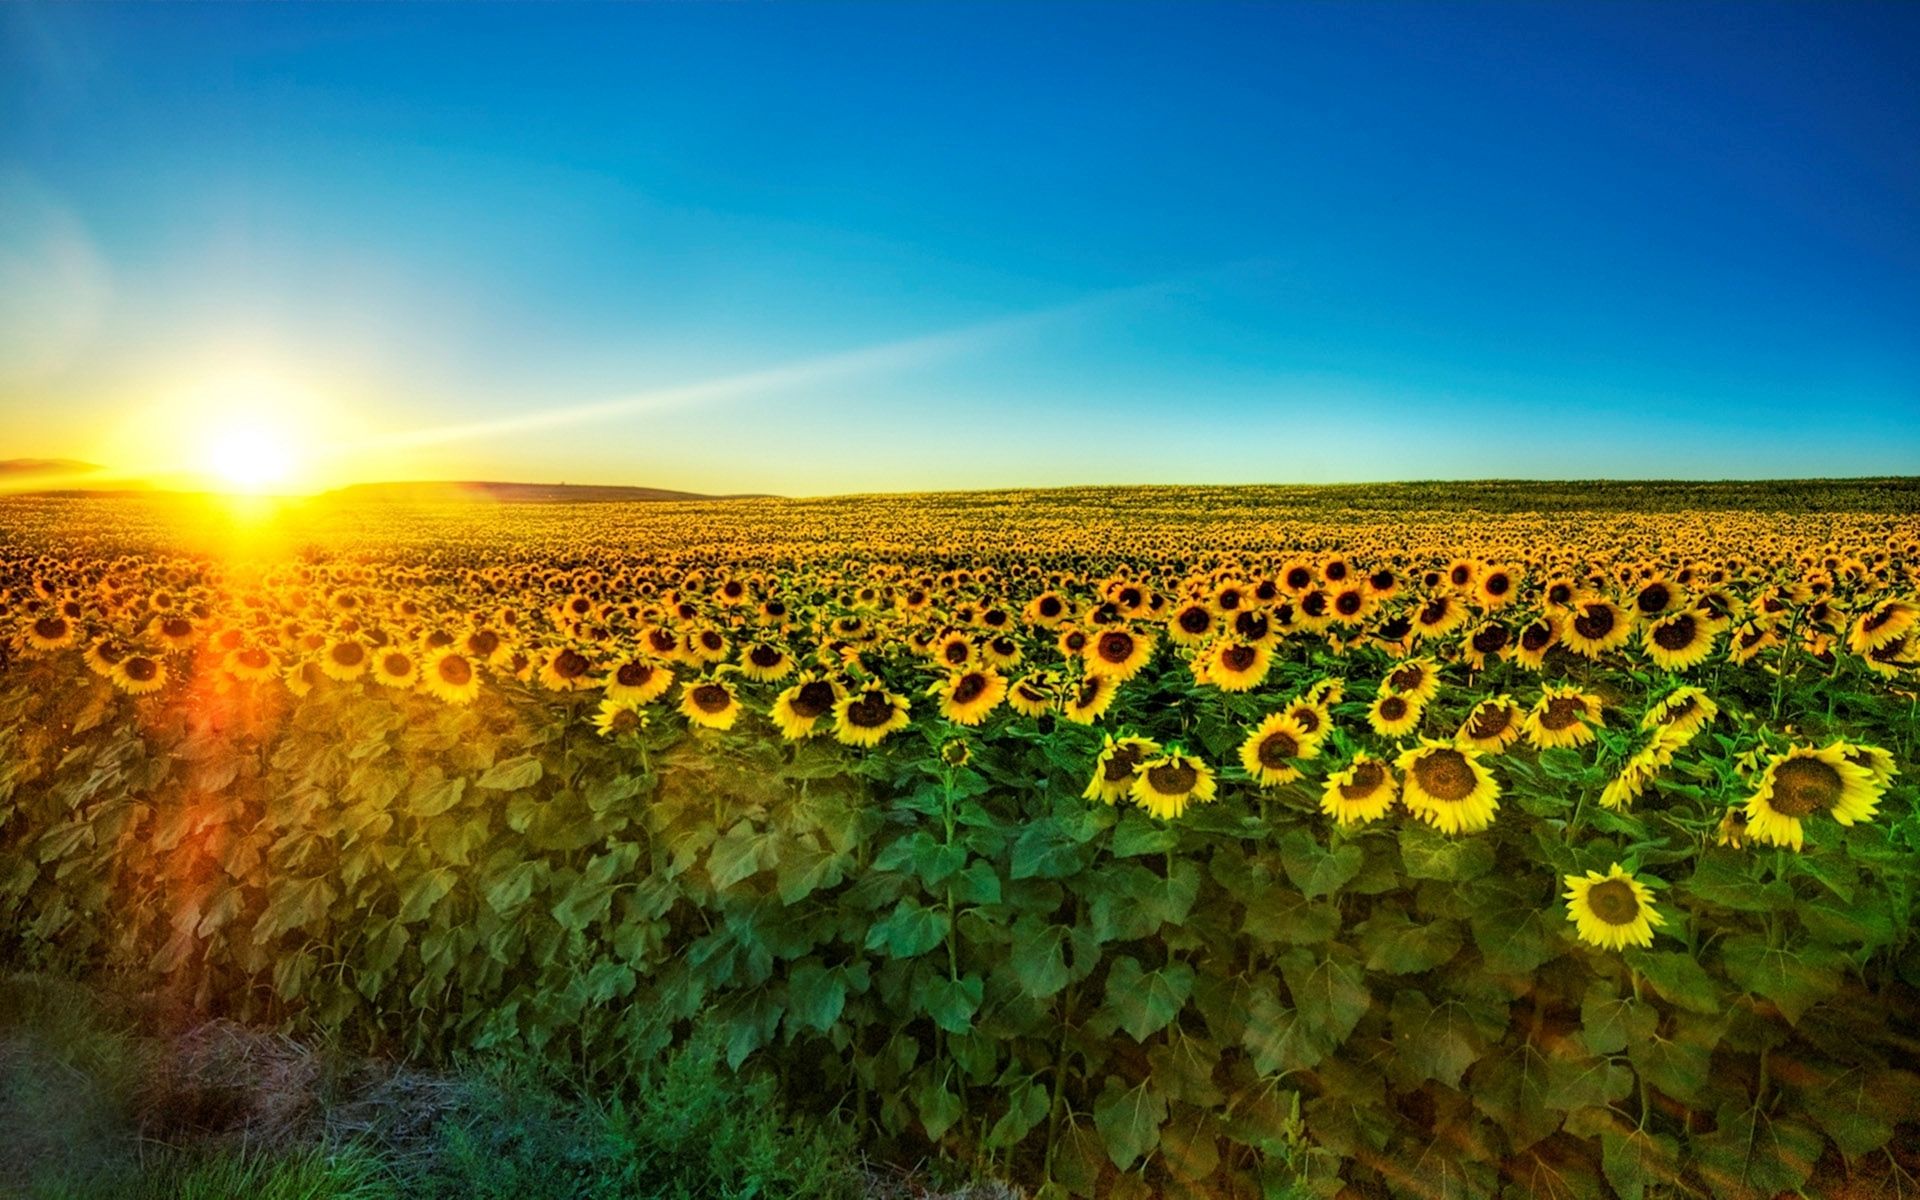  Faszinierende Hintergrundbild 1920x1200. Faszinierende Sonnenblumenfeld Hintergrundbilder. Faszinierende Sonnenblumenfeld frei fotos